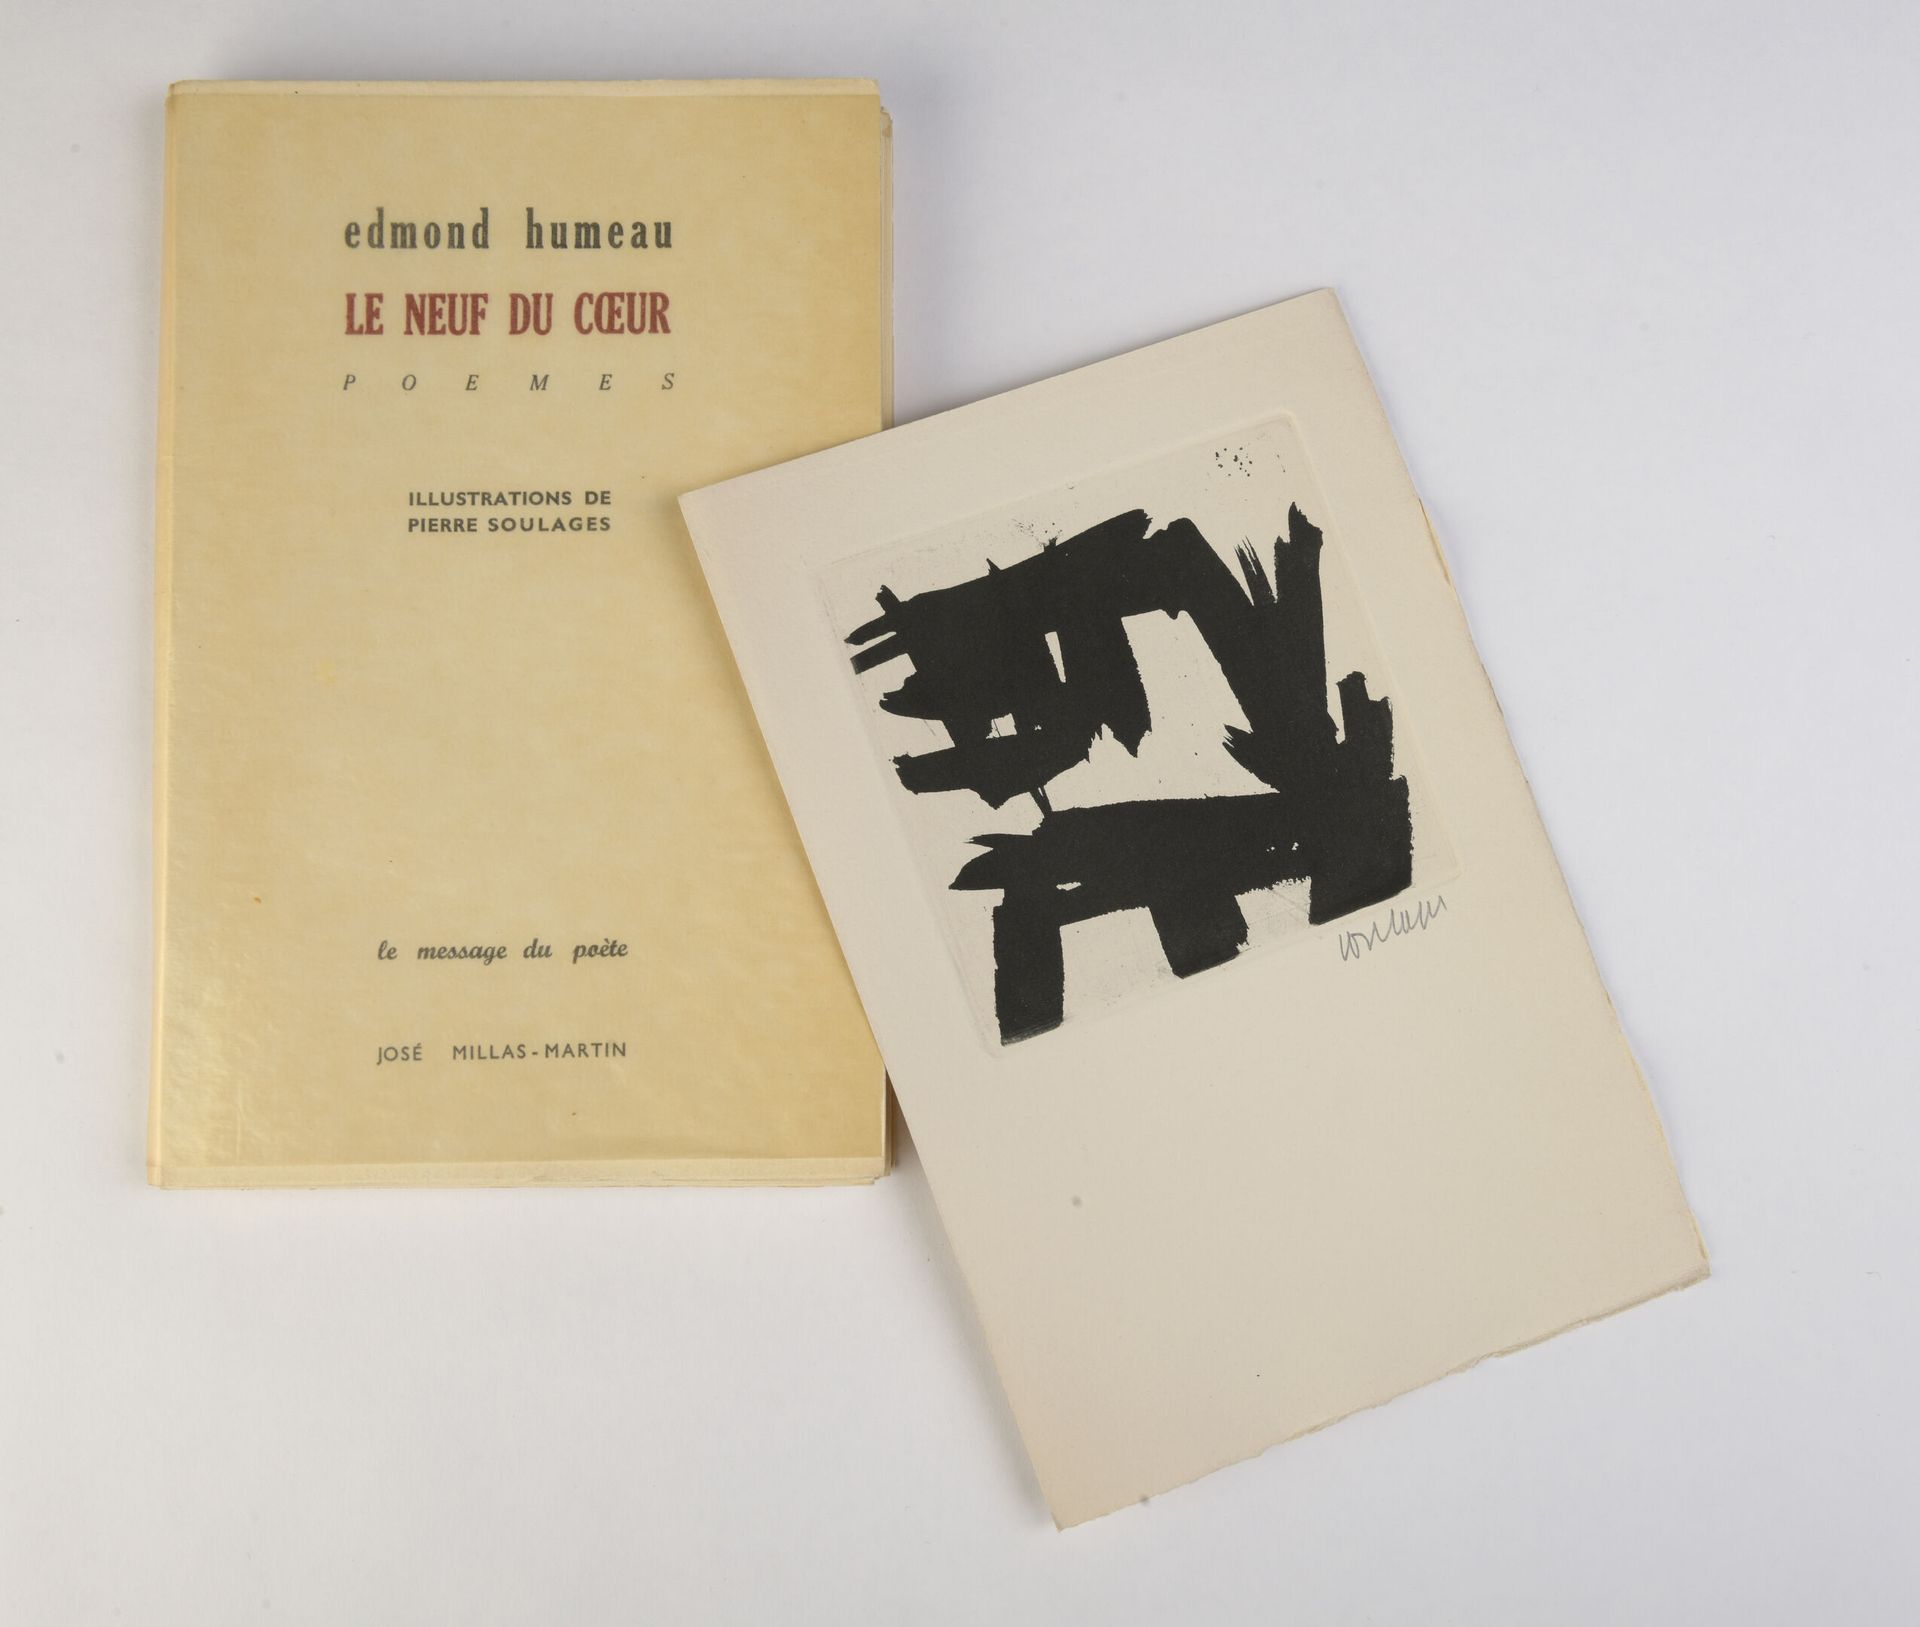 Null 皮埃尔-苏莱士（生于1919年）和埃德蒙-胡默尔（1907-1998）。

Le neuf du coeur, 巴黎, Le messager du &hellip;